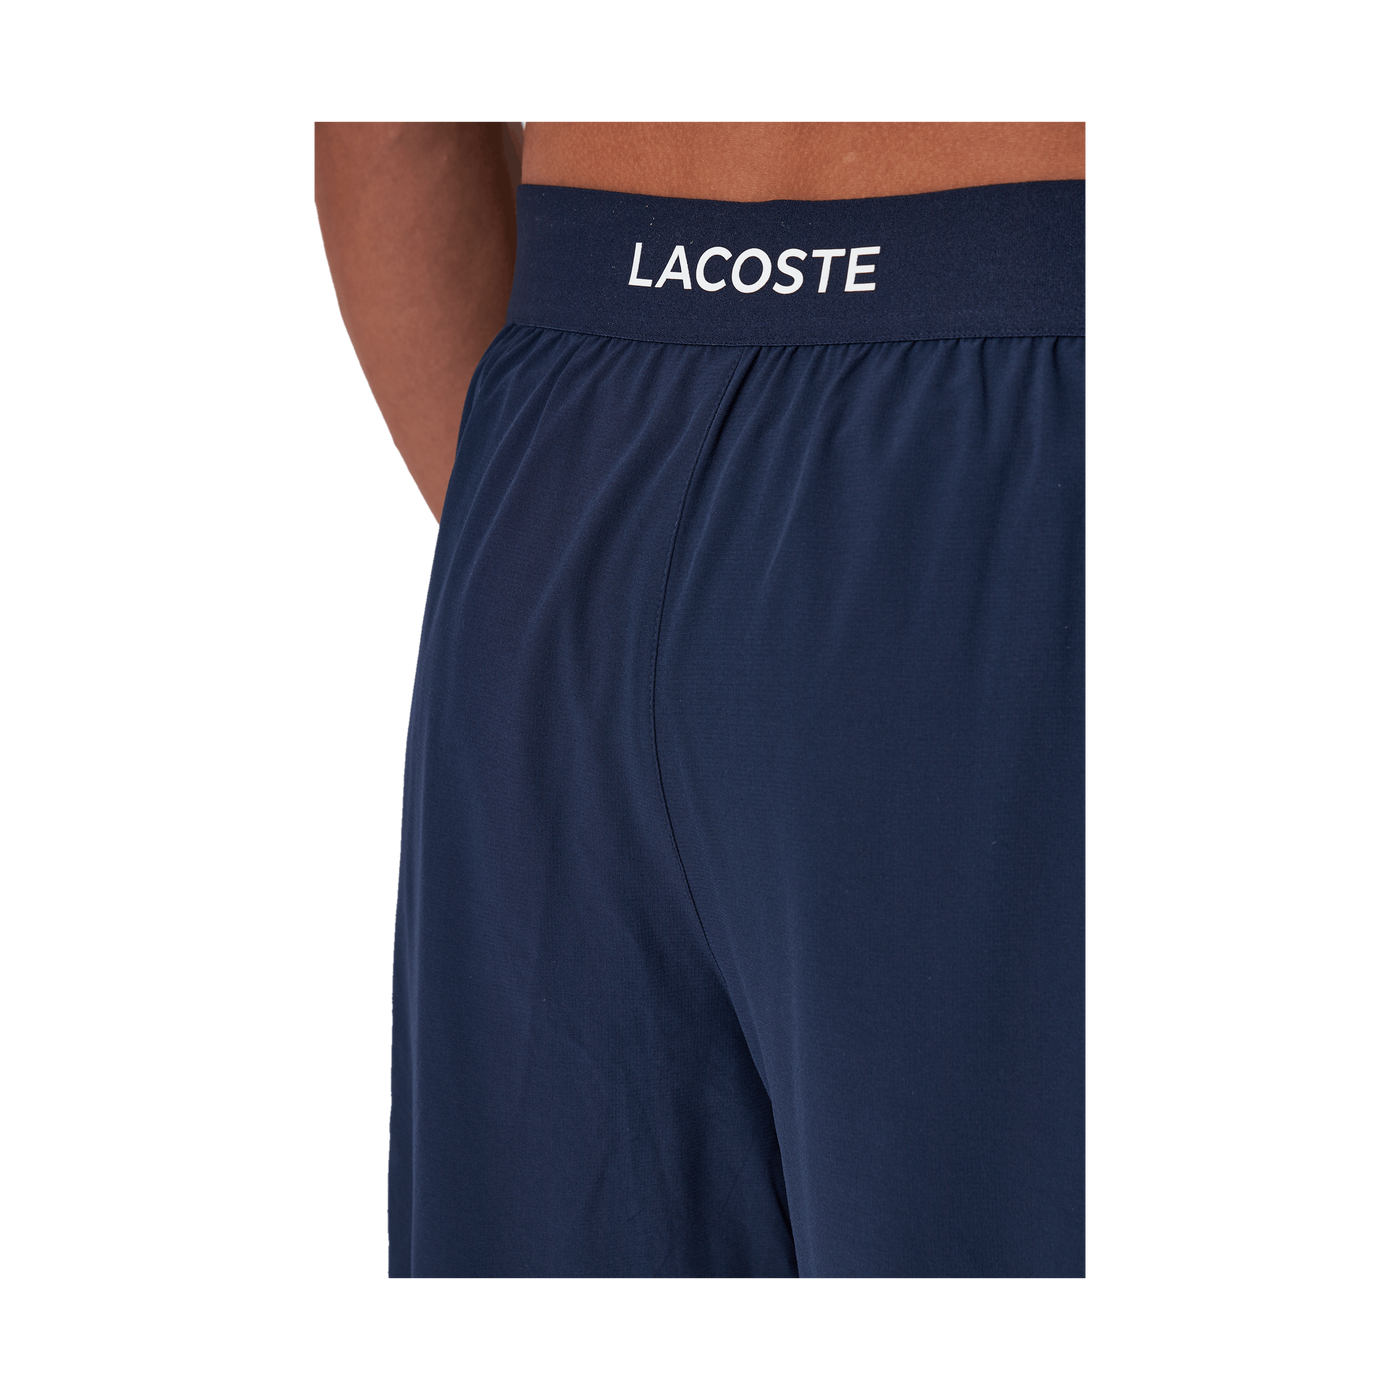 Lacoste Shorts Navy